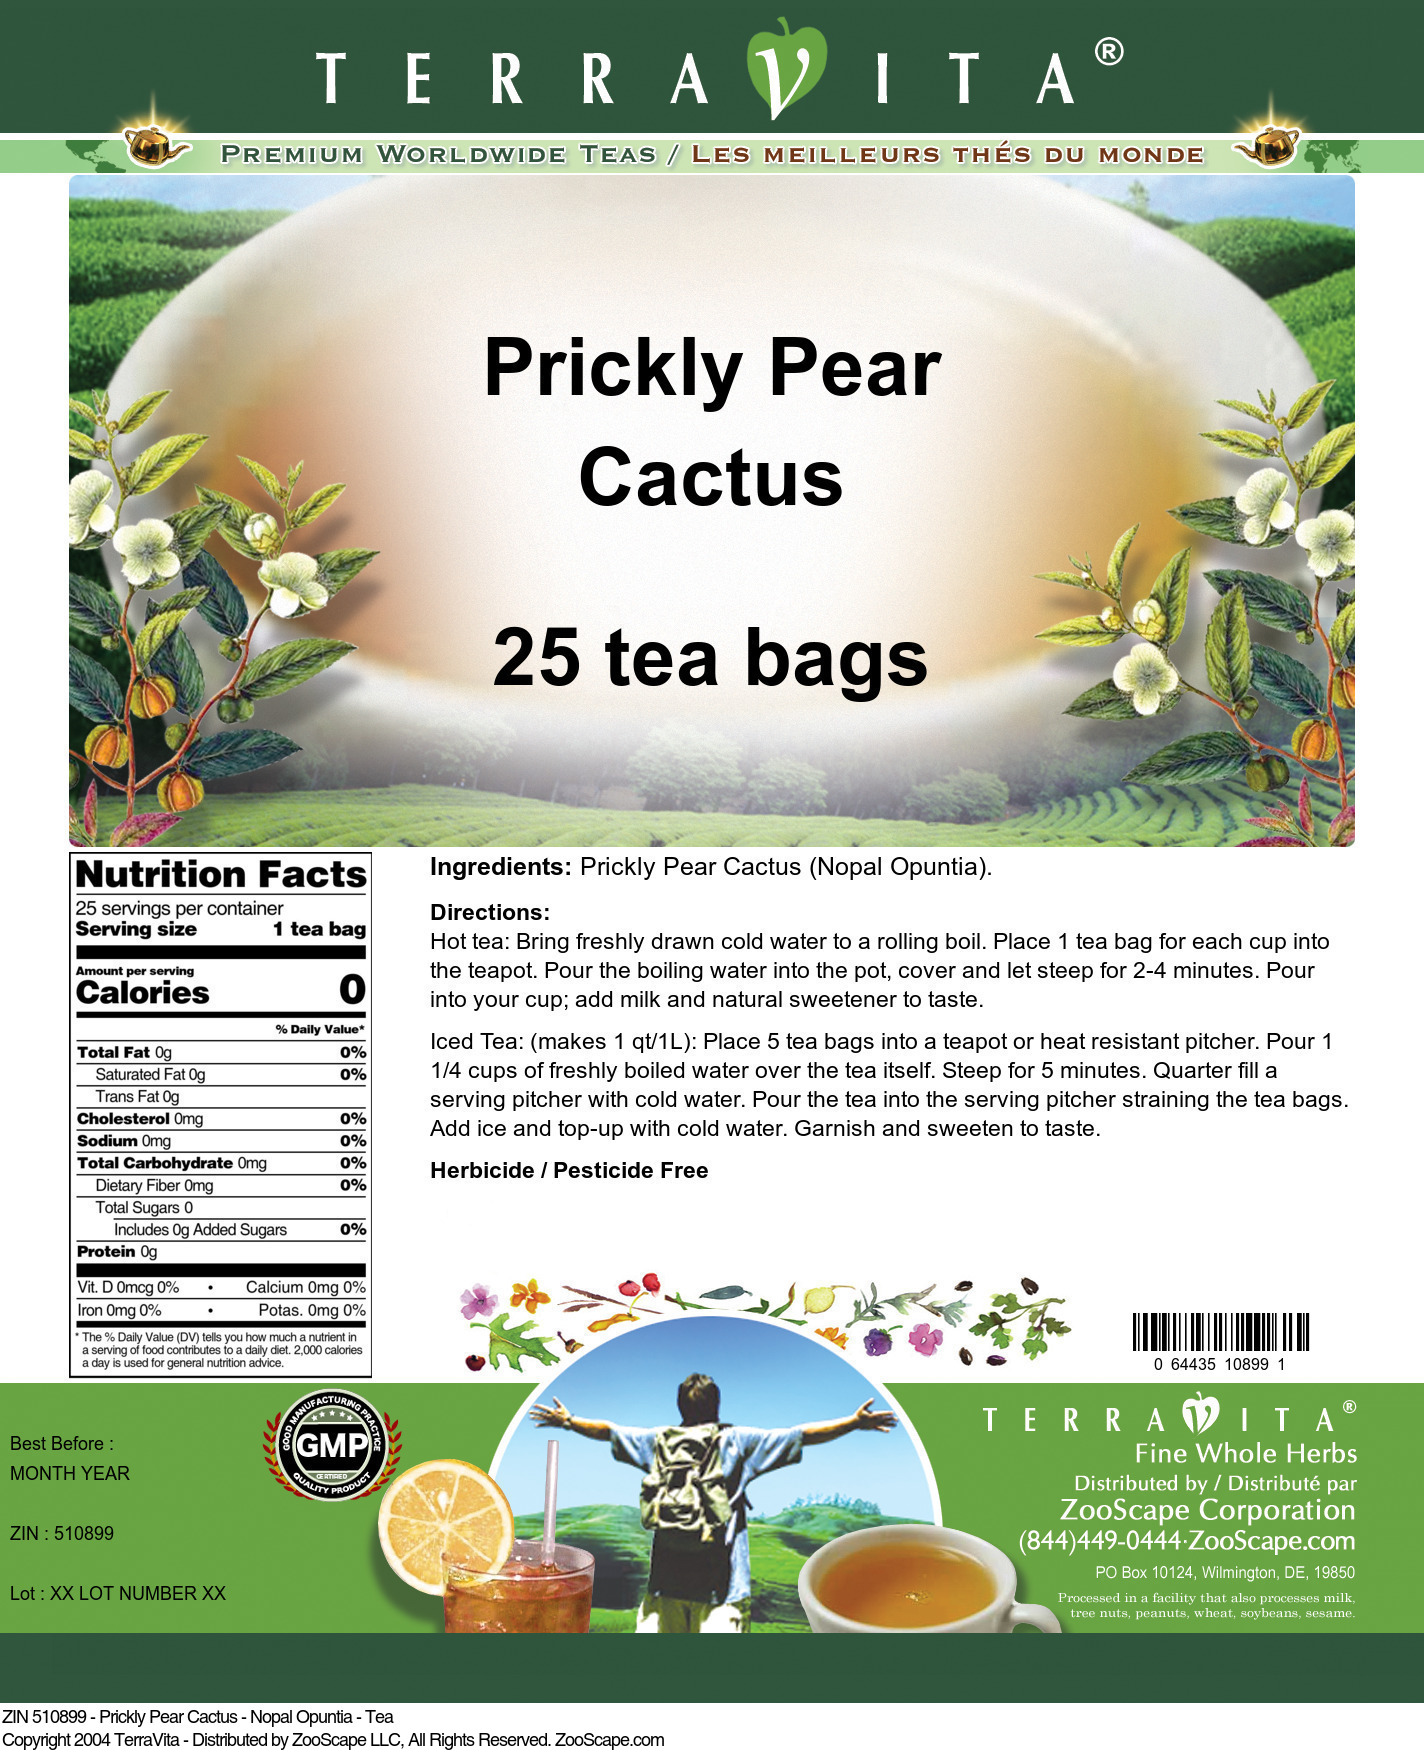 Prickly Pear Cactus - Nopal Opuntia - Tea - Label